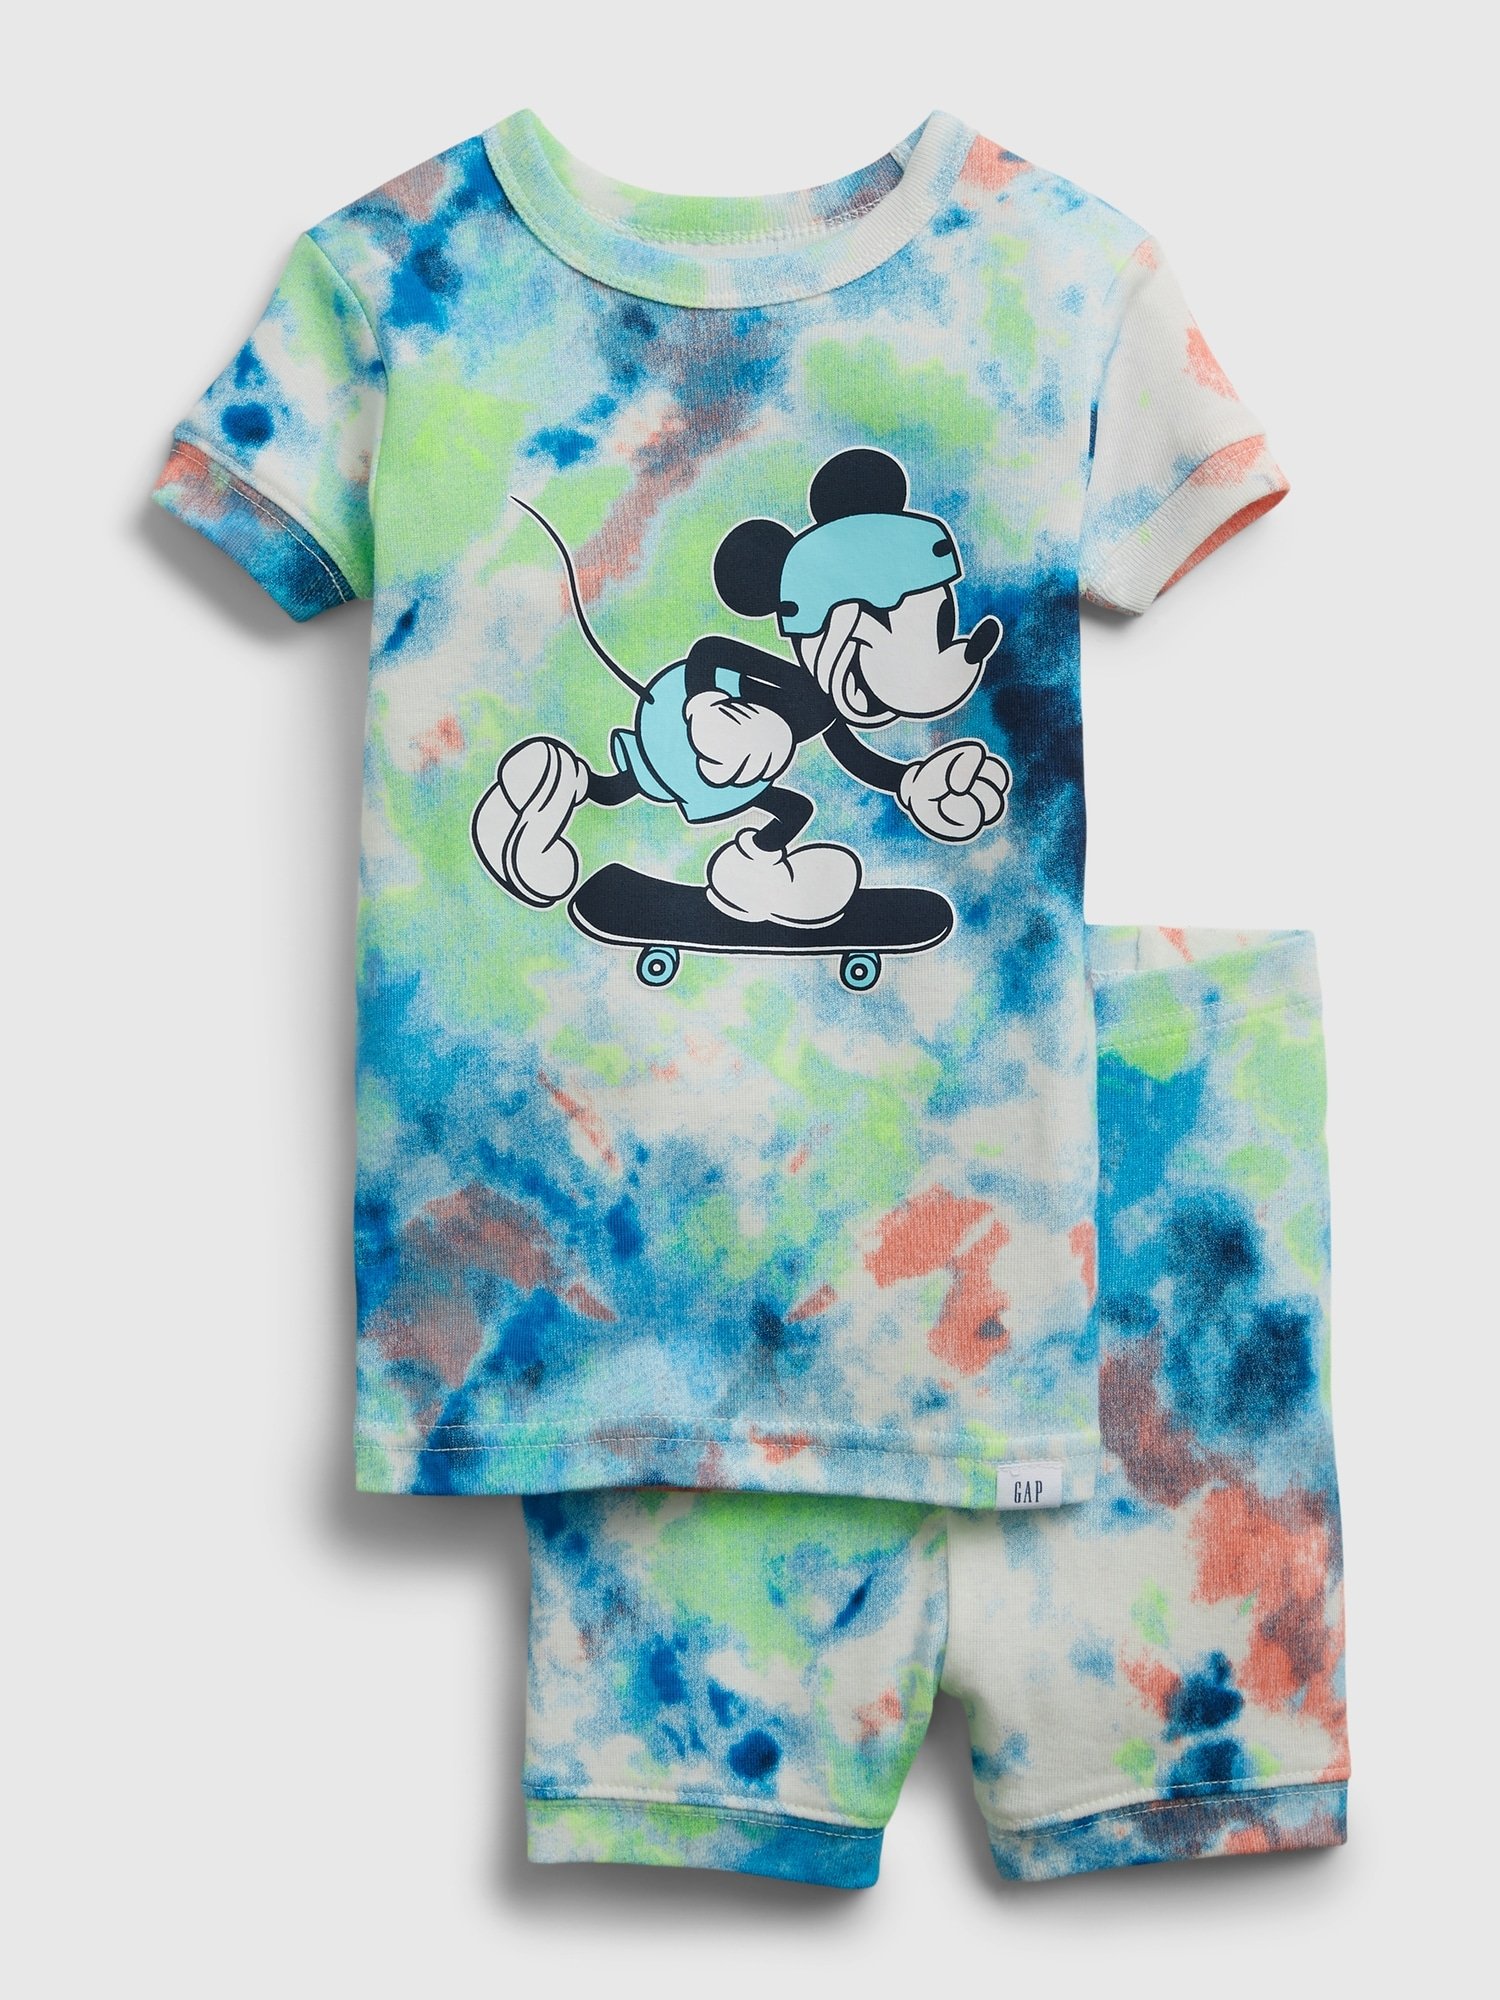 Disney Mickey Mouse Tie-Dye Pijama Takımı product image